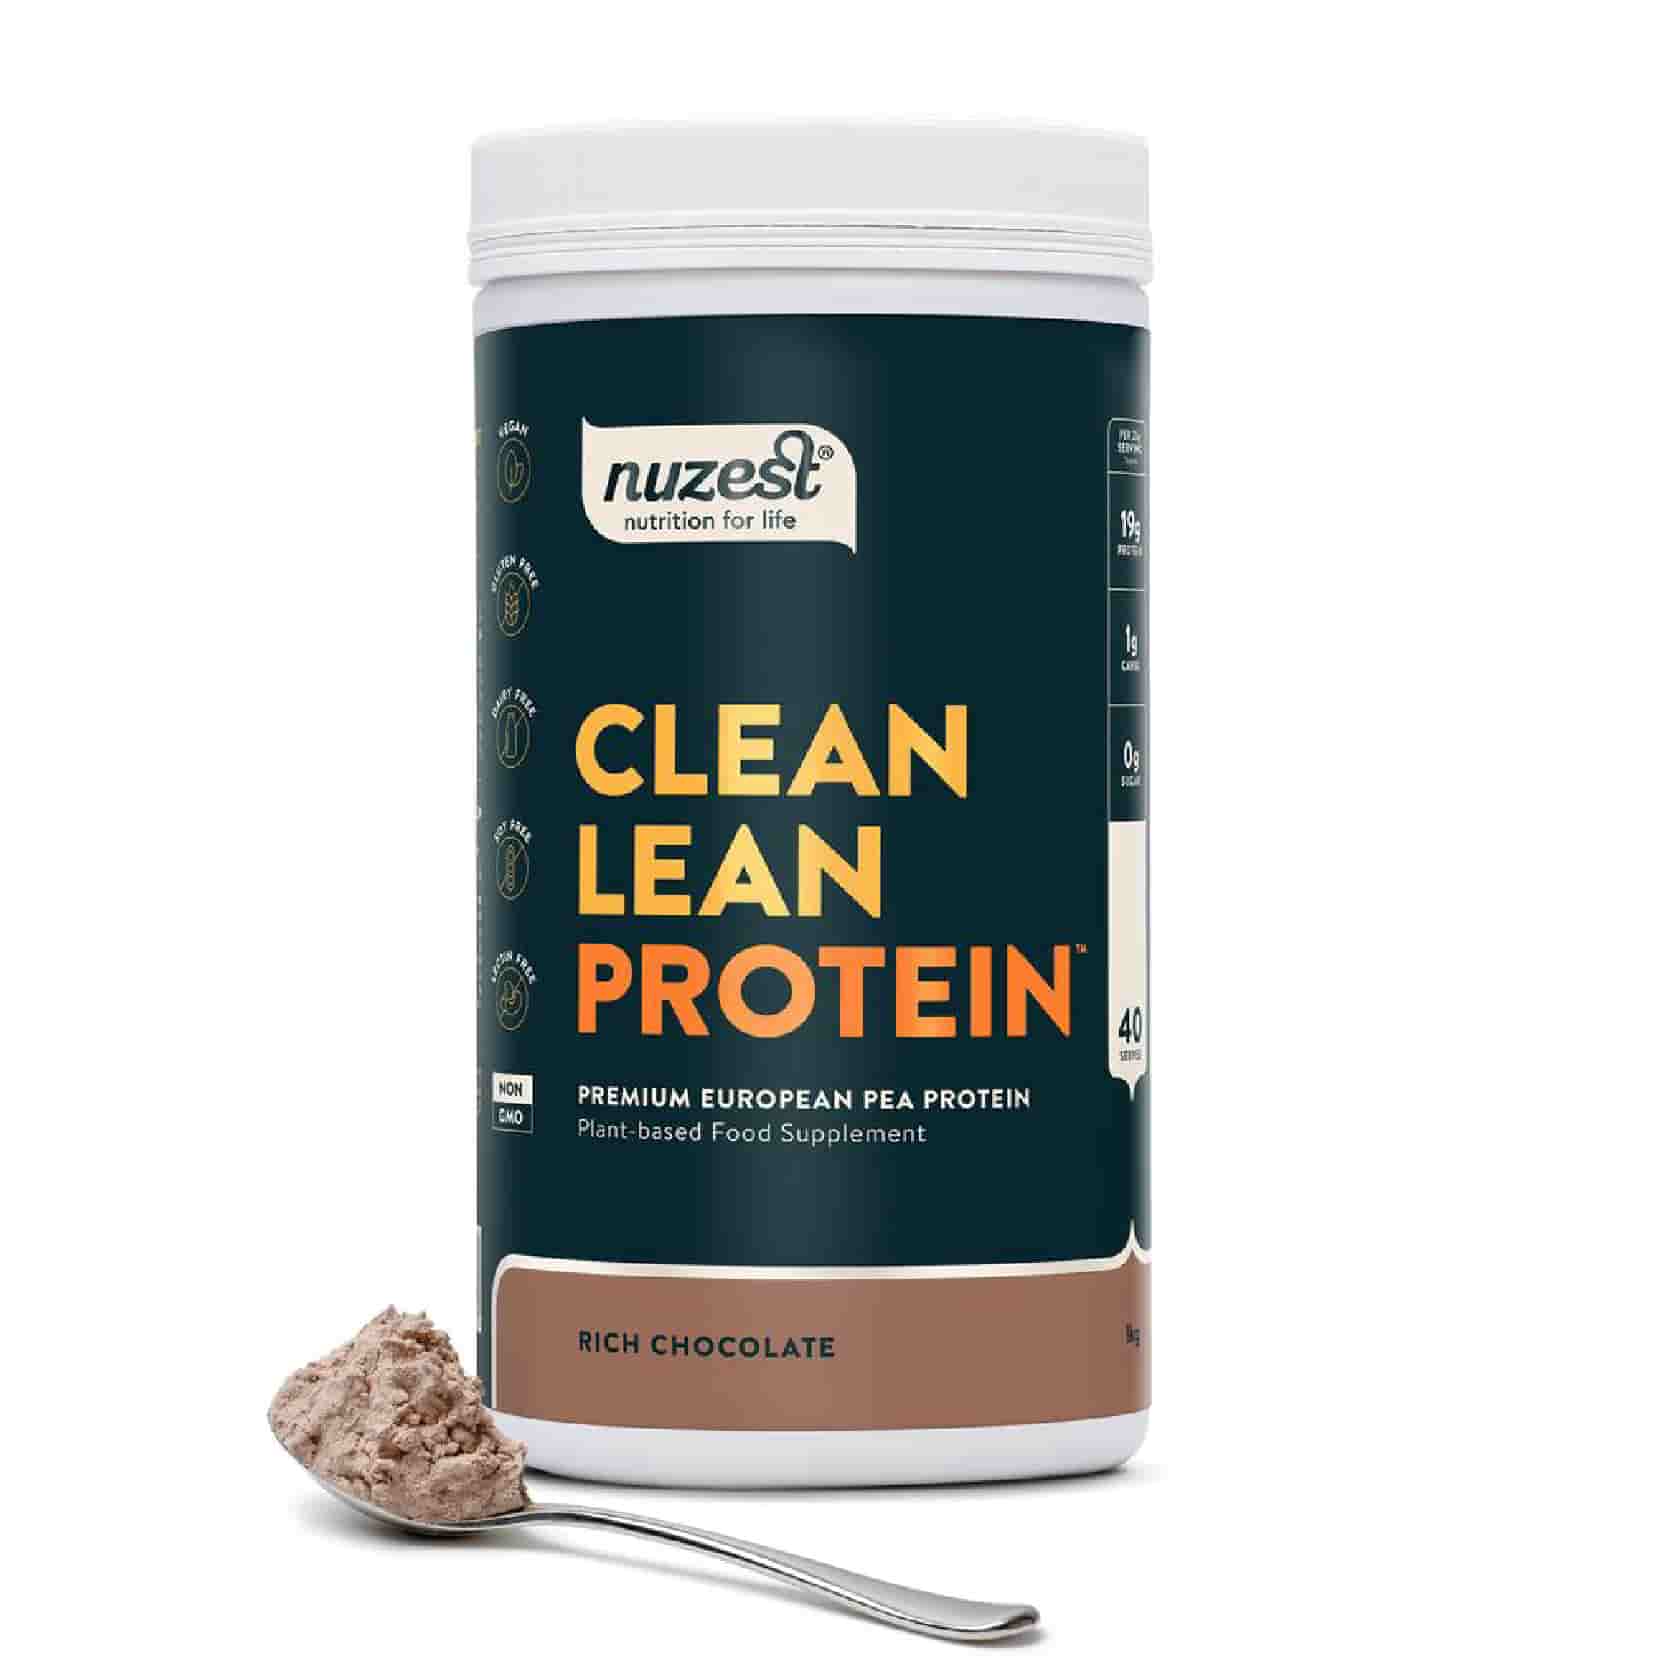 Buy Nuzest Clean Lean Protein Rich Chocolate 1 kg at LiveHelfi